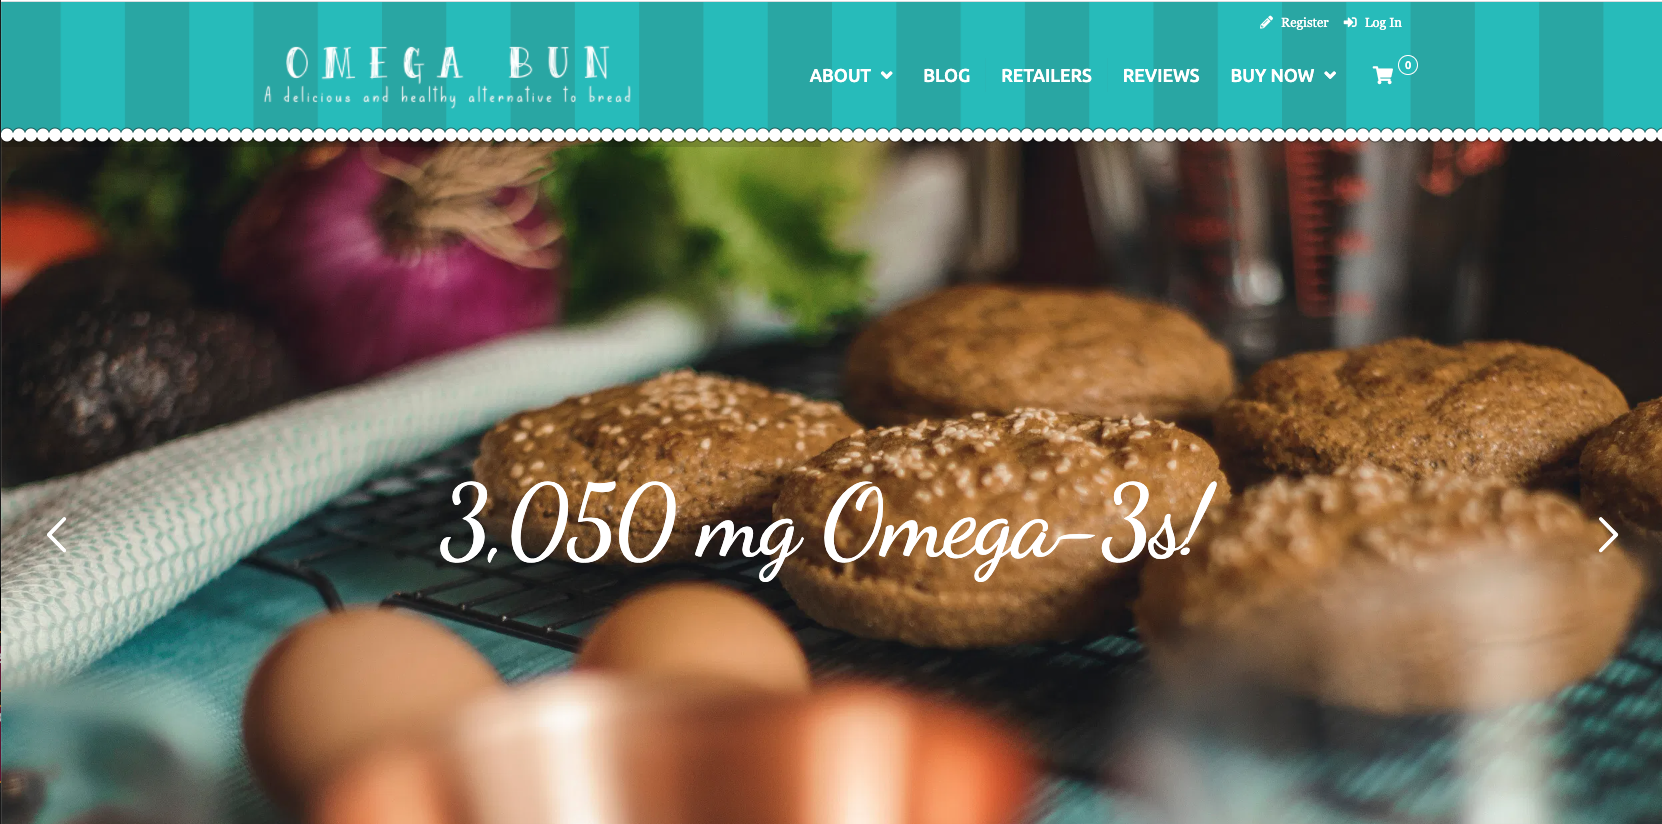 Omegabun website